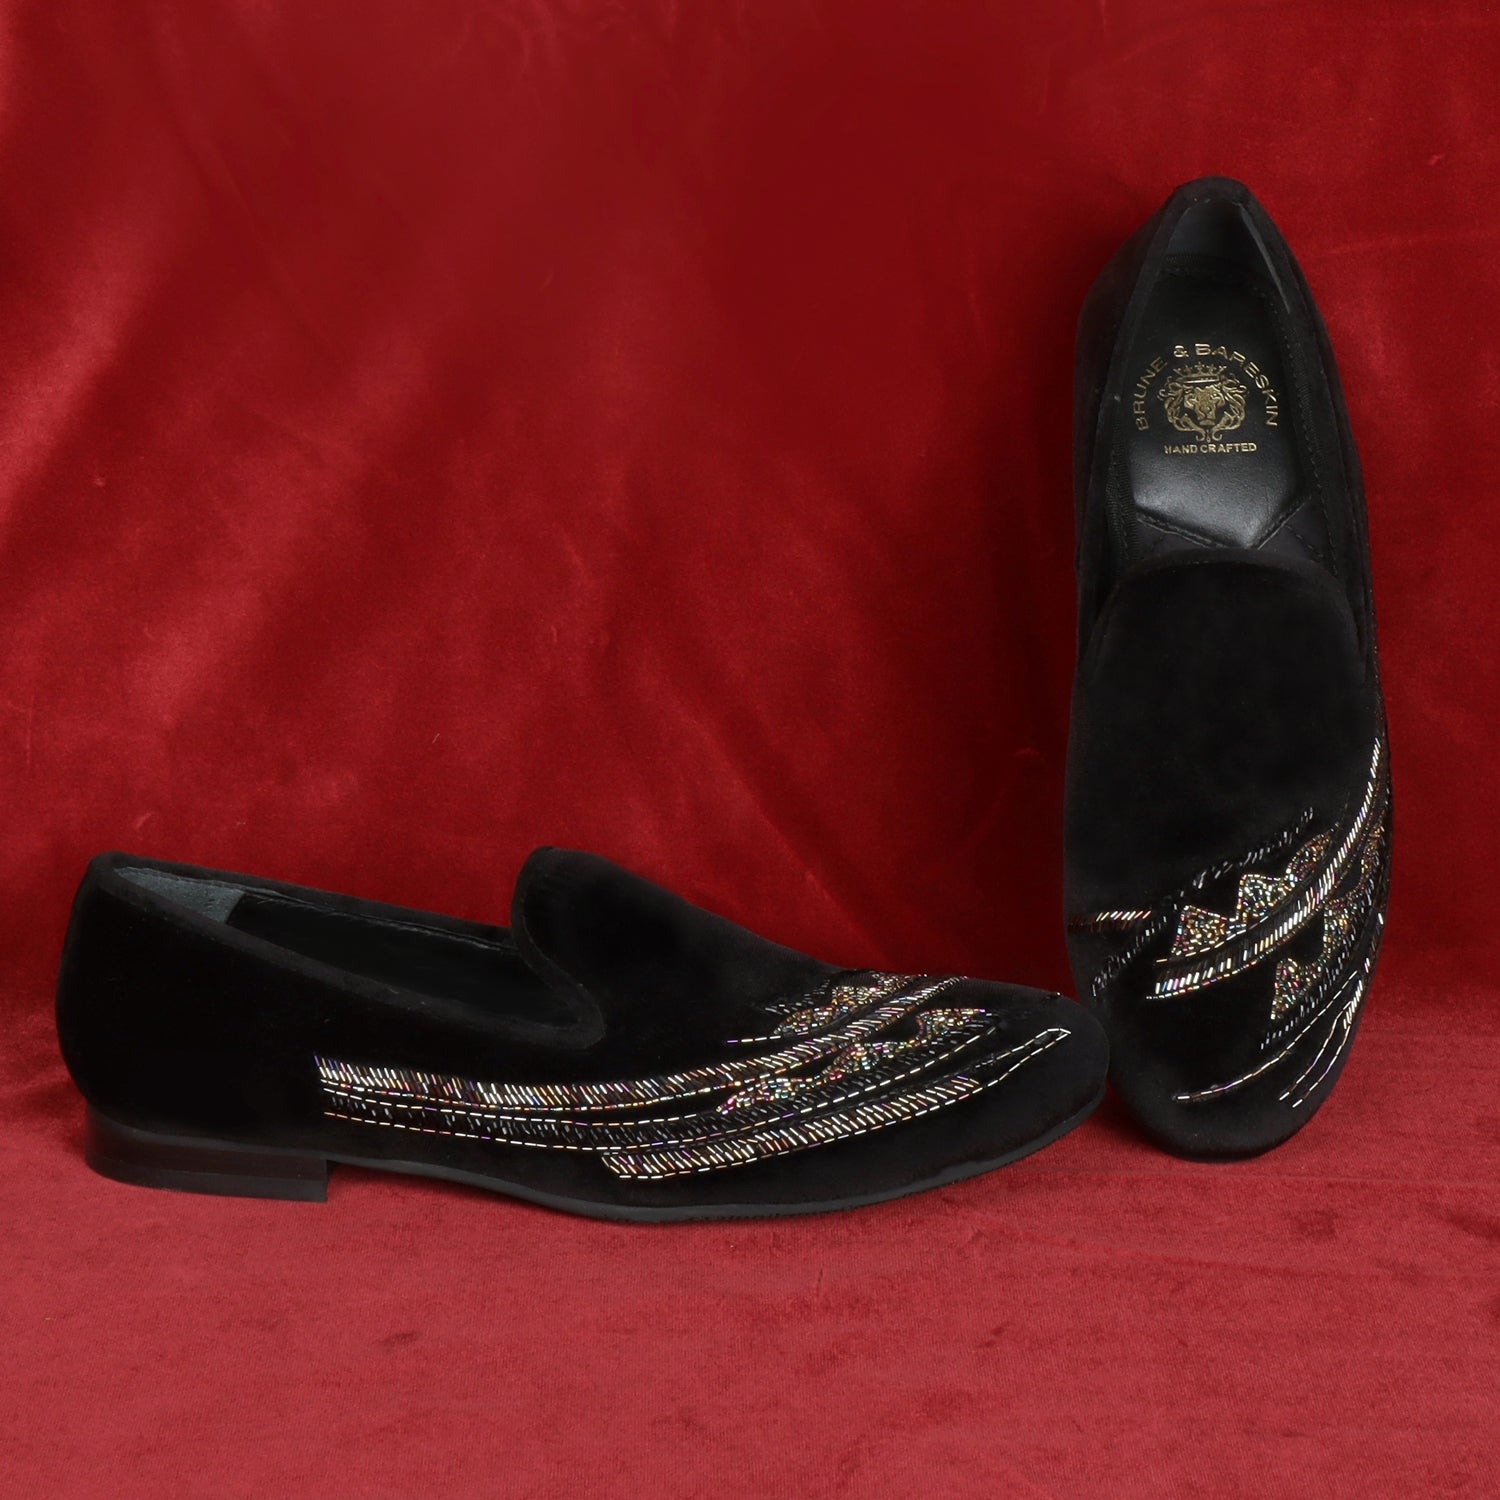 Buppy - Black With Brown Sole – Black velvet shoes